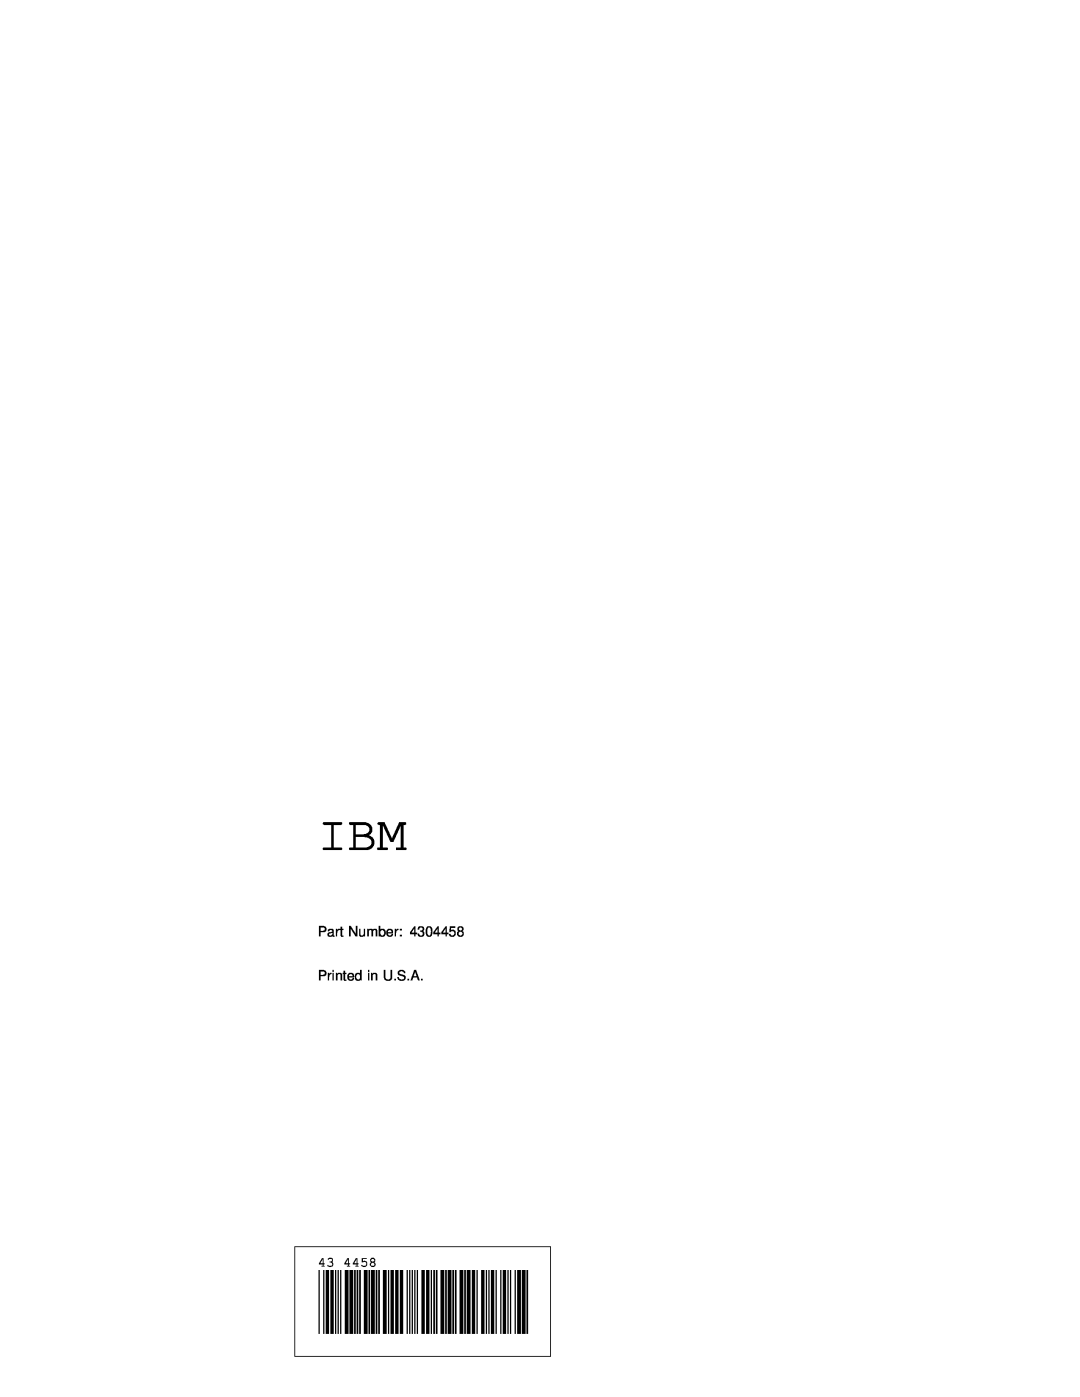 IBM Partner Pavilion TrackPoint manual Part Number Printed in U.S.A 